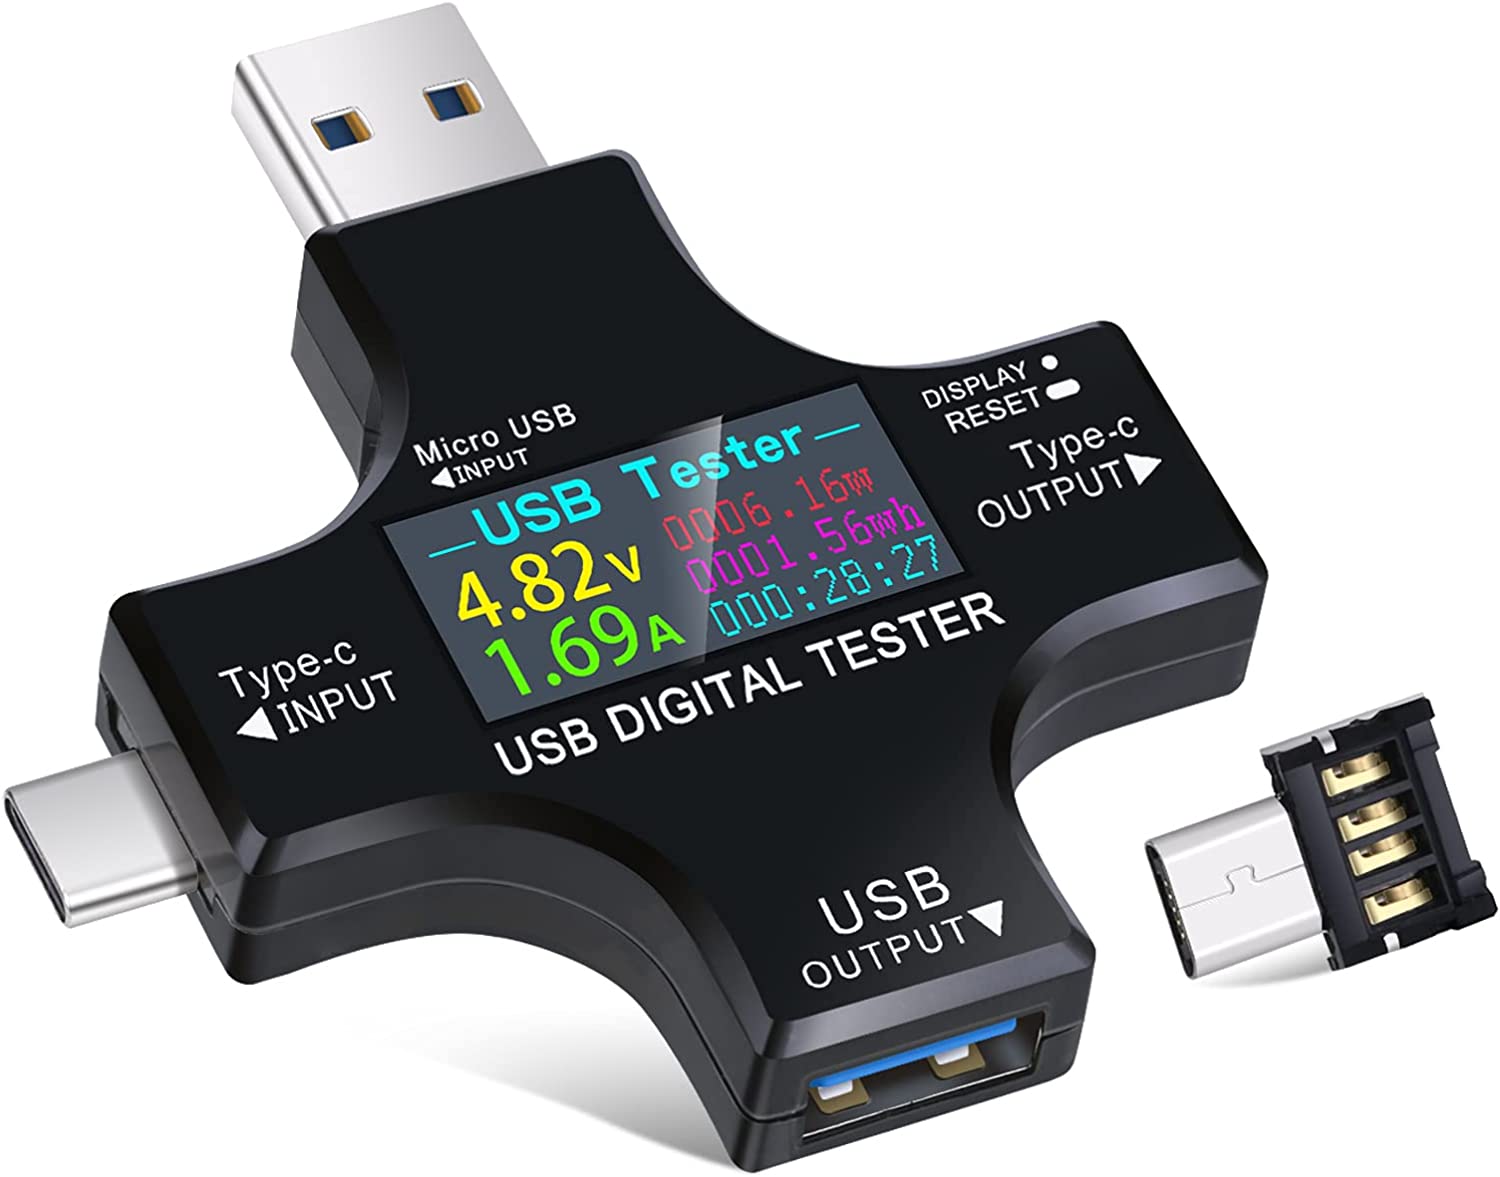 USB Power Tester